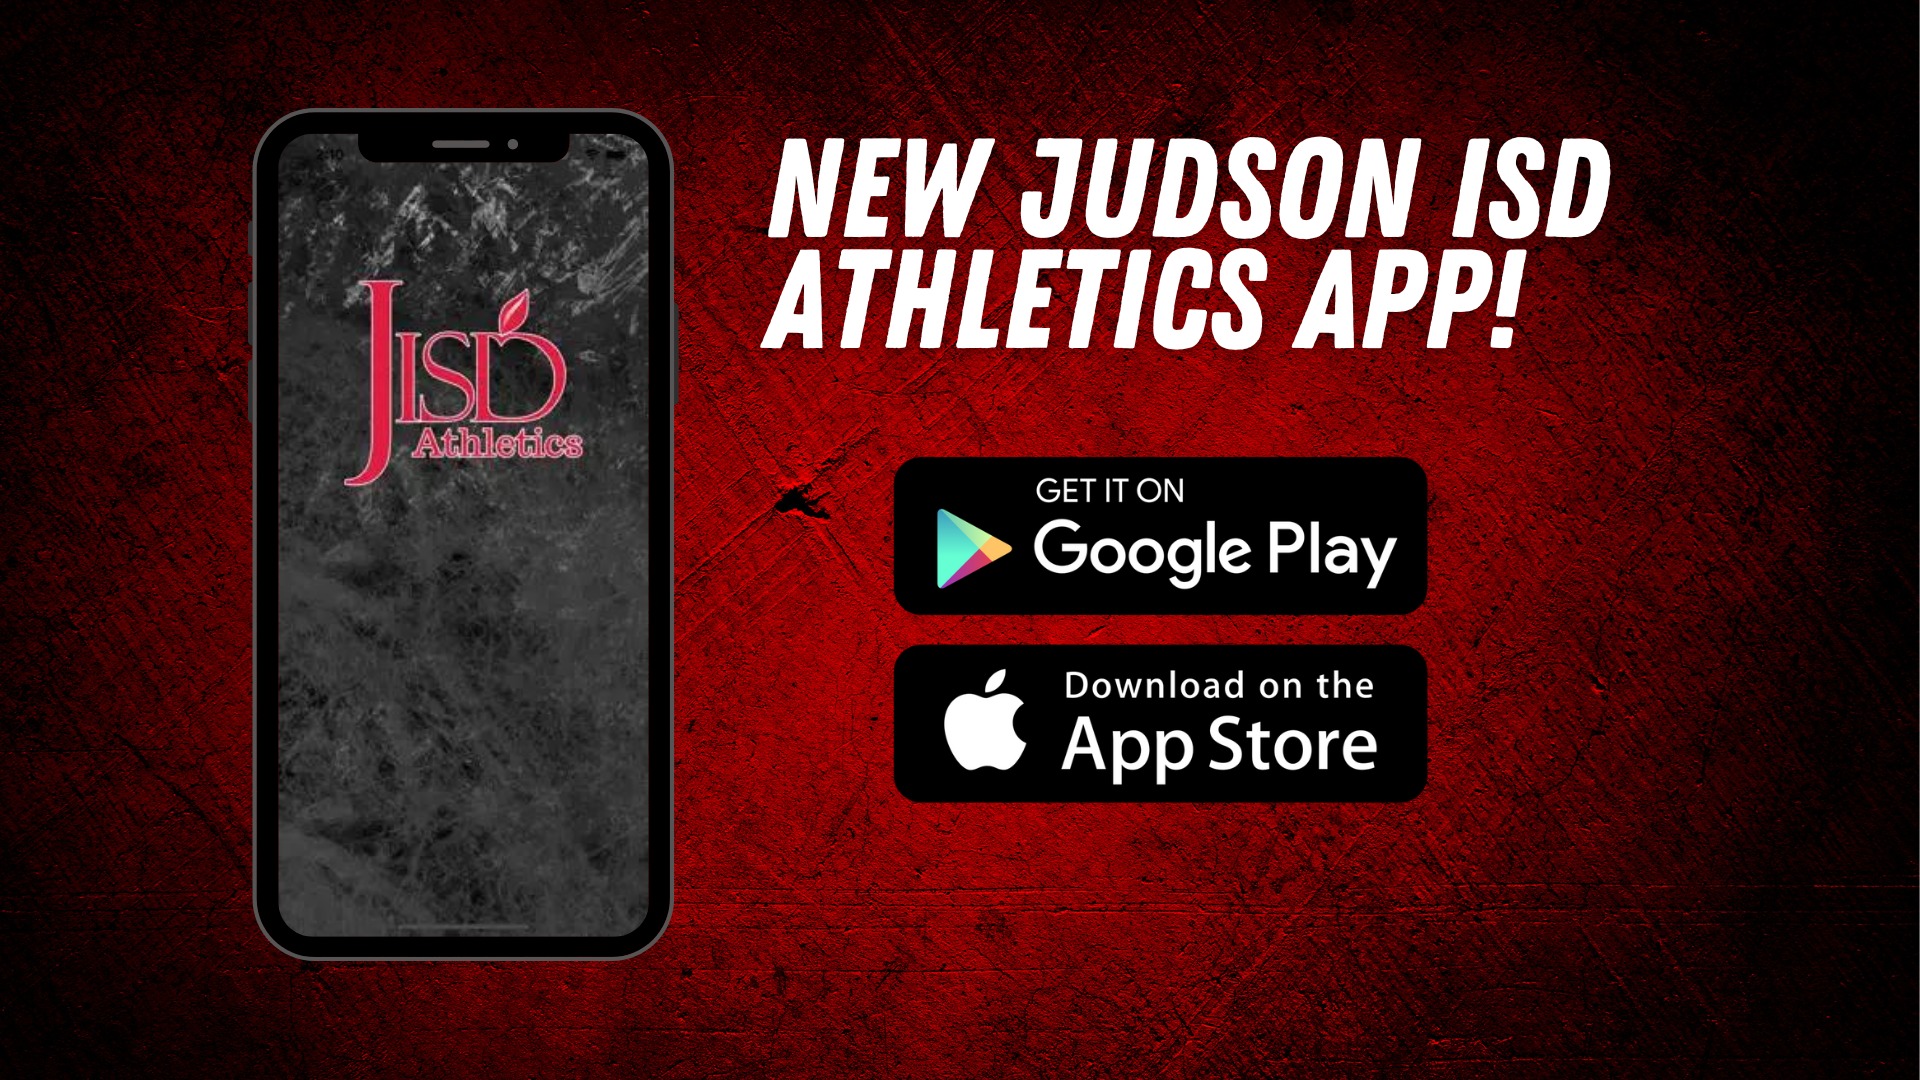 Wagner HSSlide 4 - Judson ISD Athletics releases new app